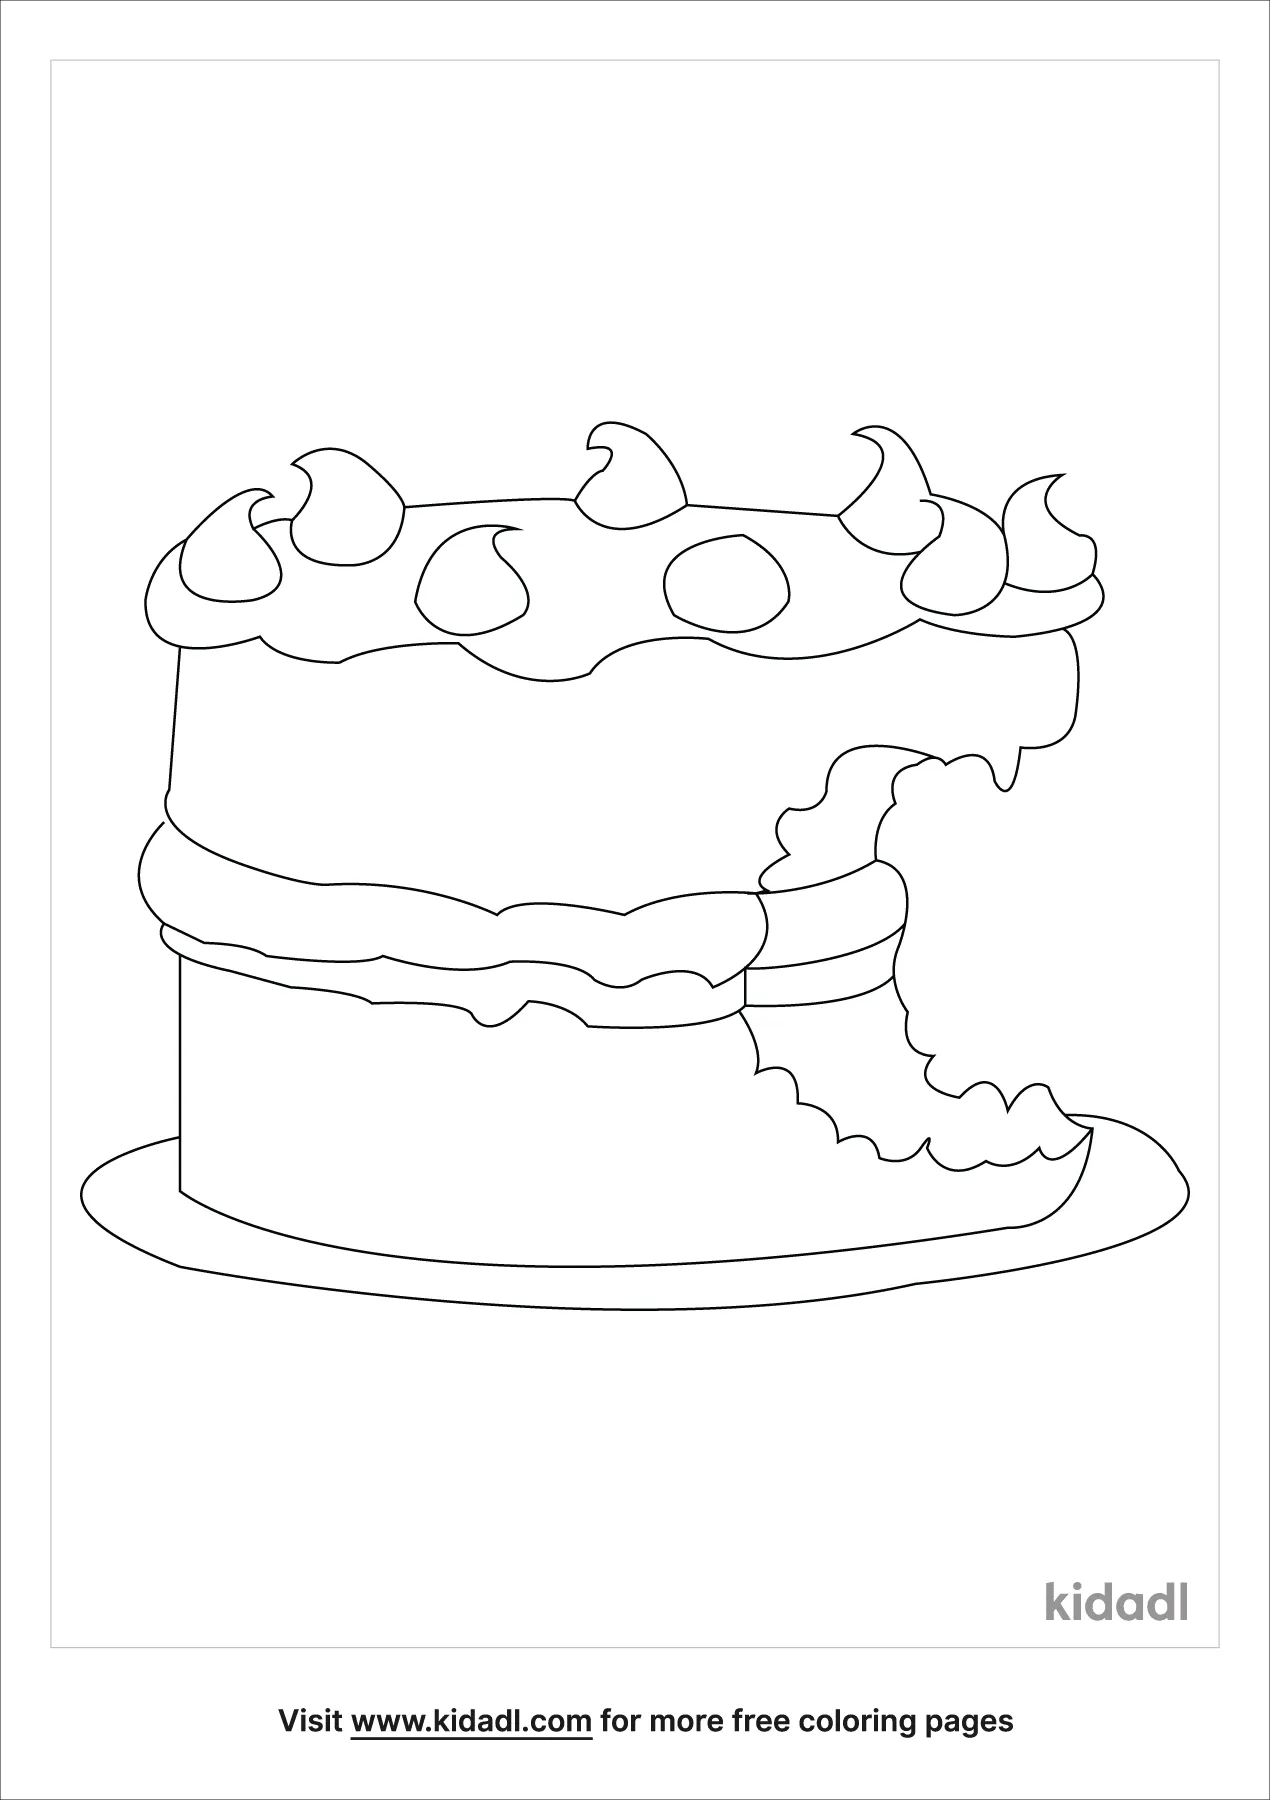 Half Eaten Cake Coloring Page